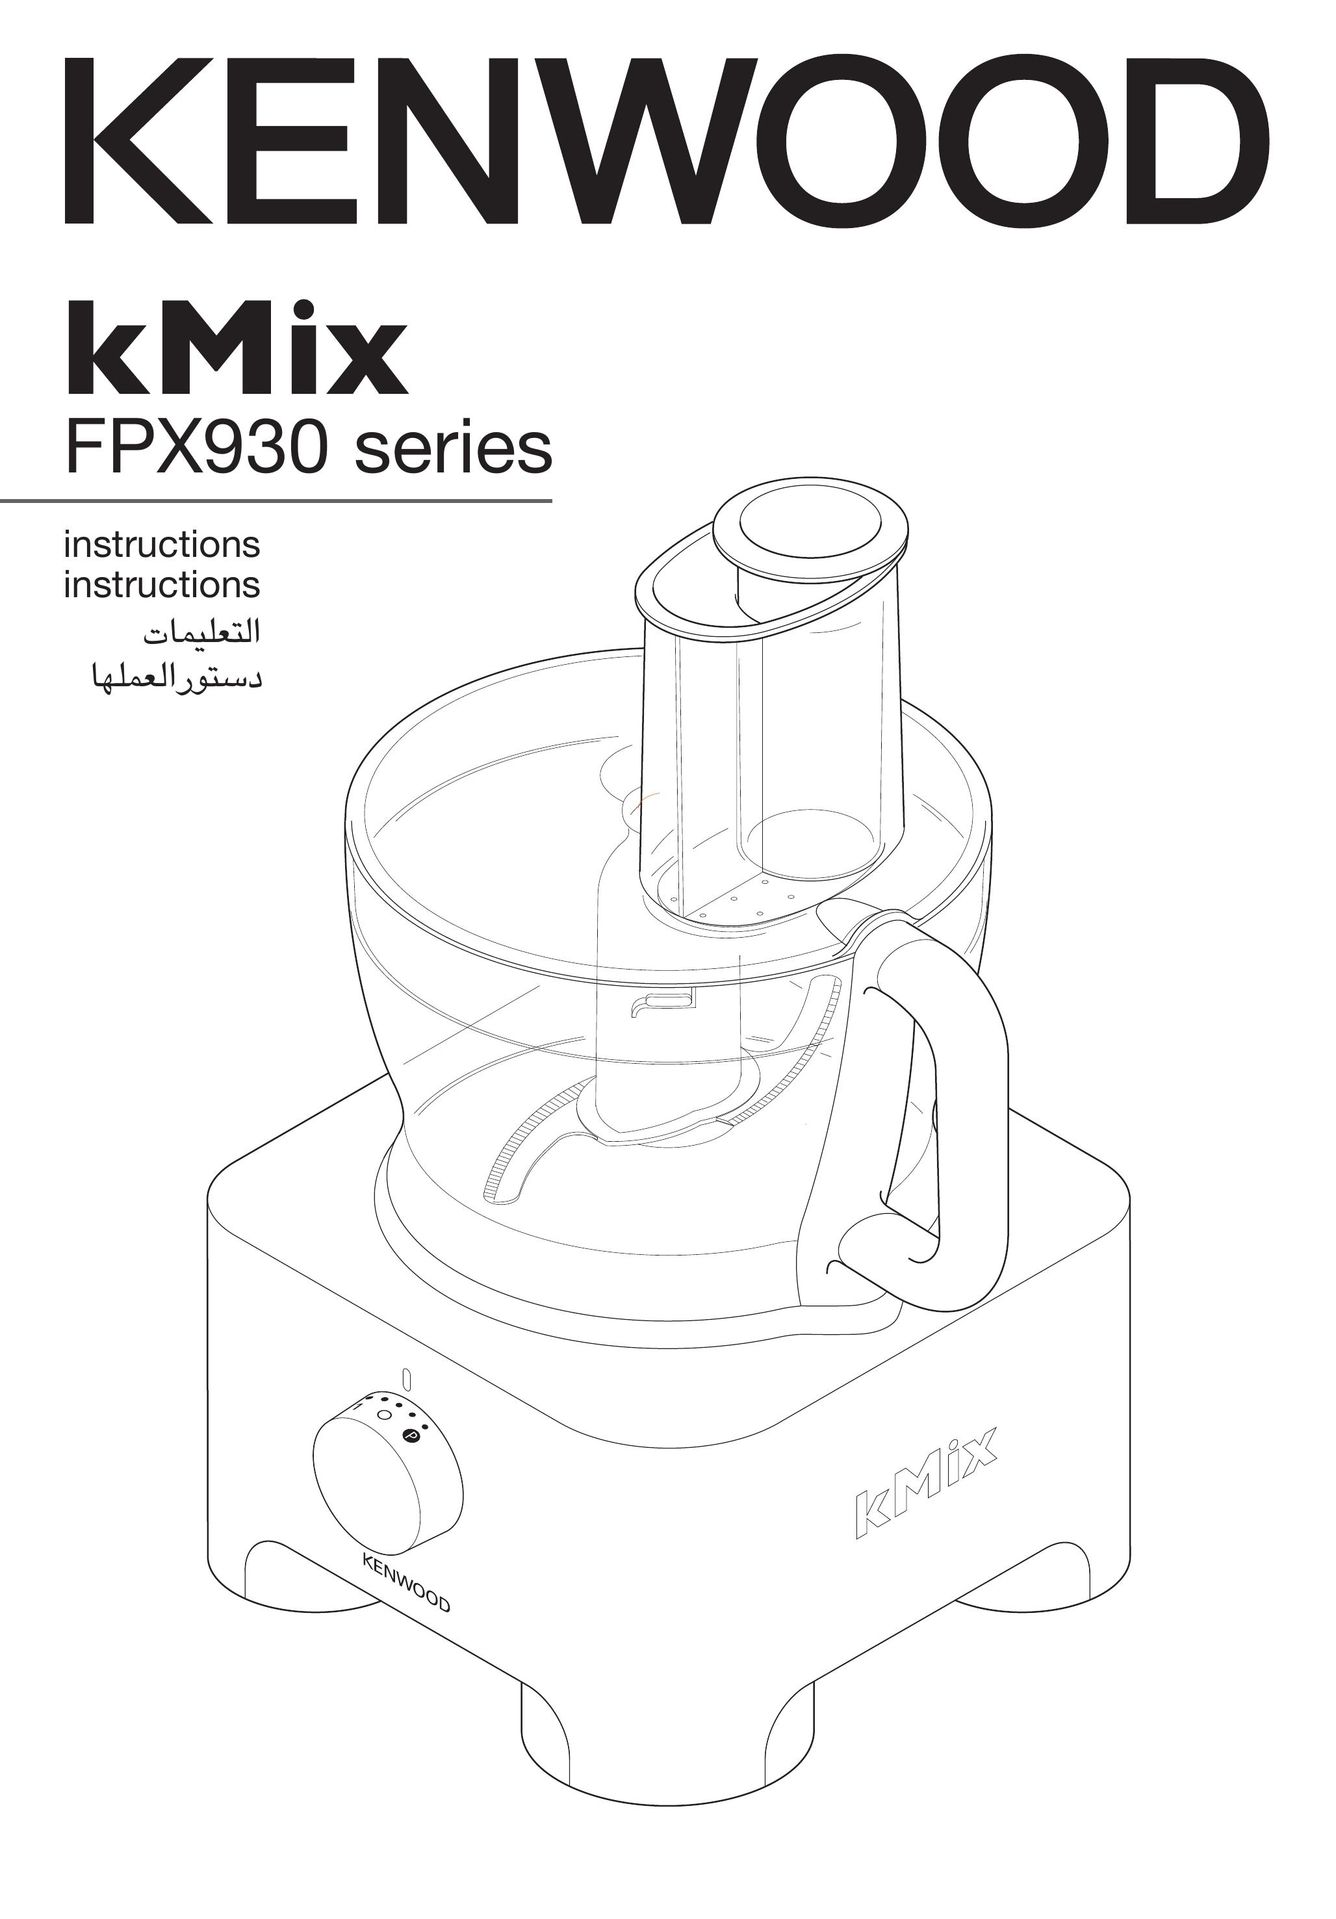 Kenwood FPX930 series Food Processor User Manual